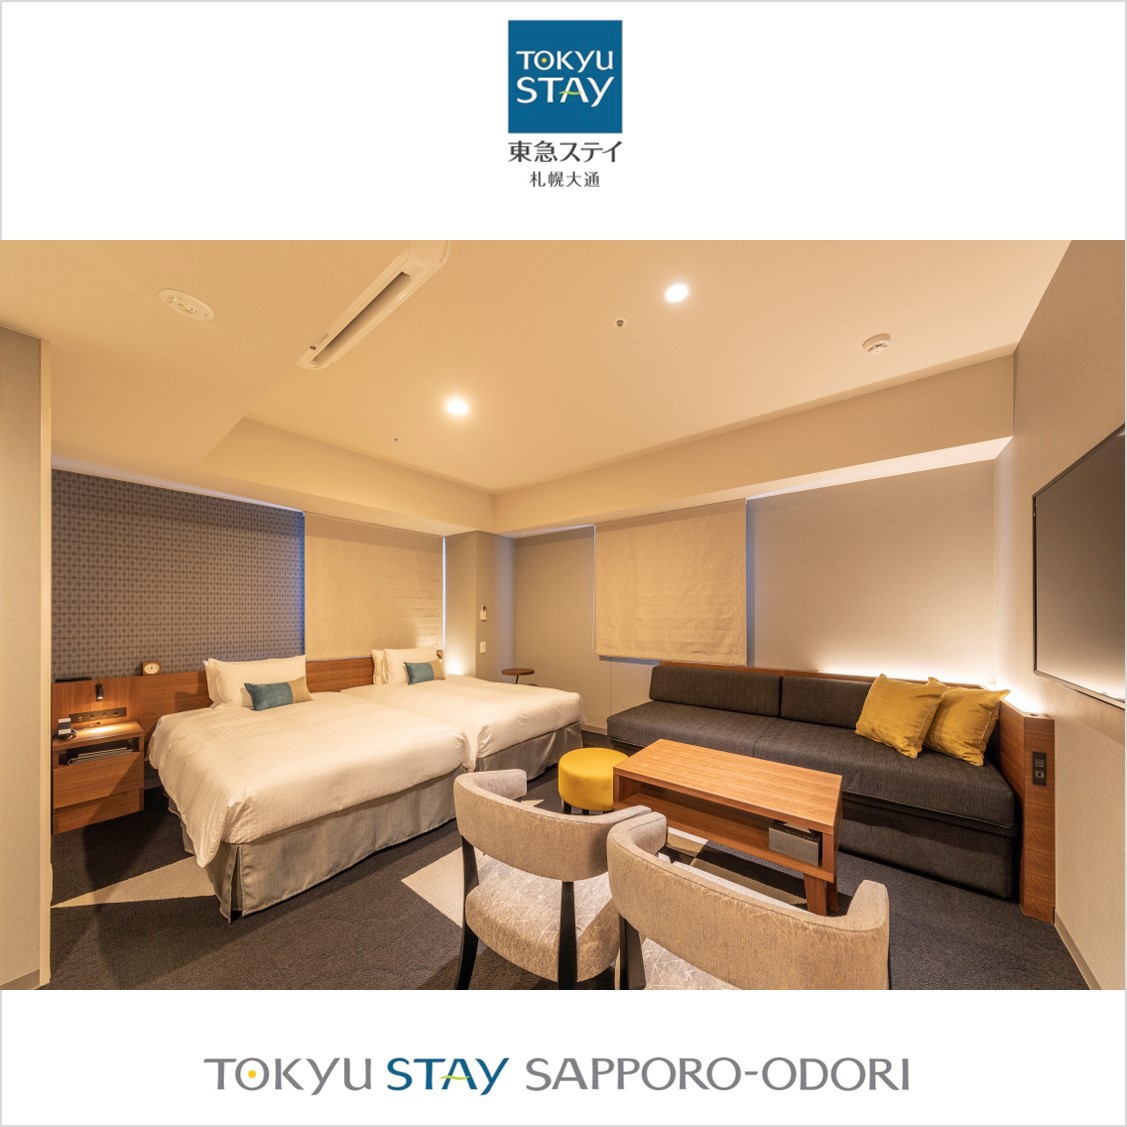 Tokyu Stay Sapporo Odori